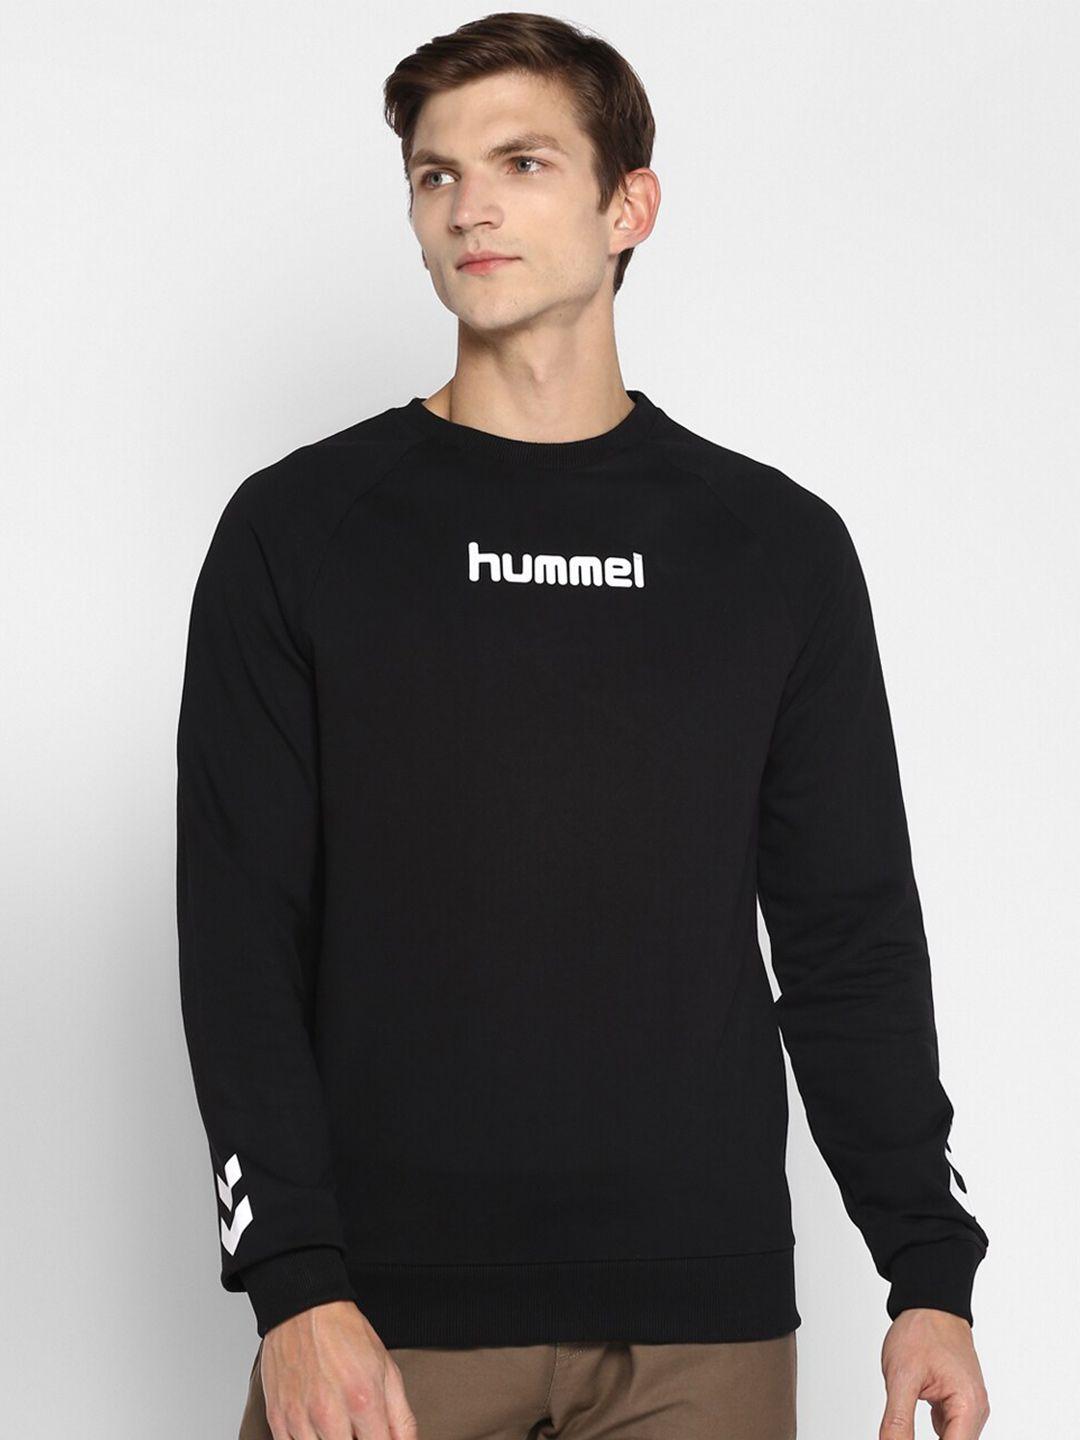 hummel men black printed sweatshirt